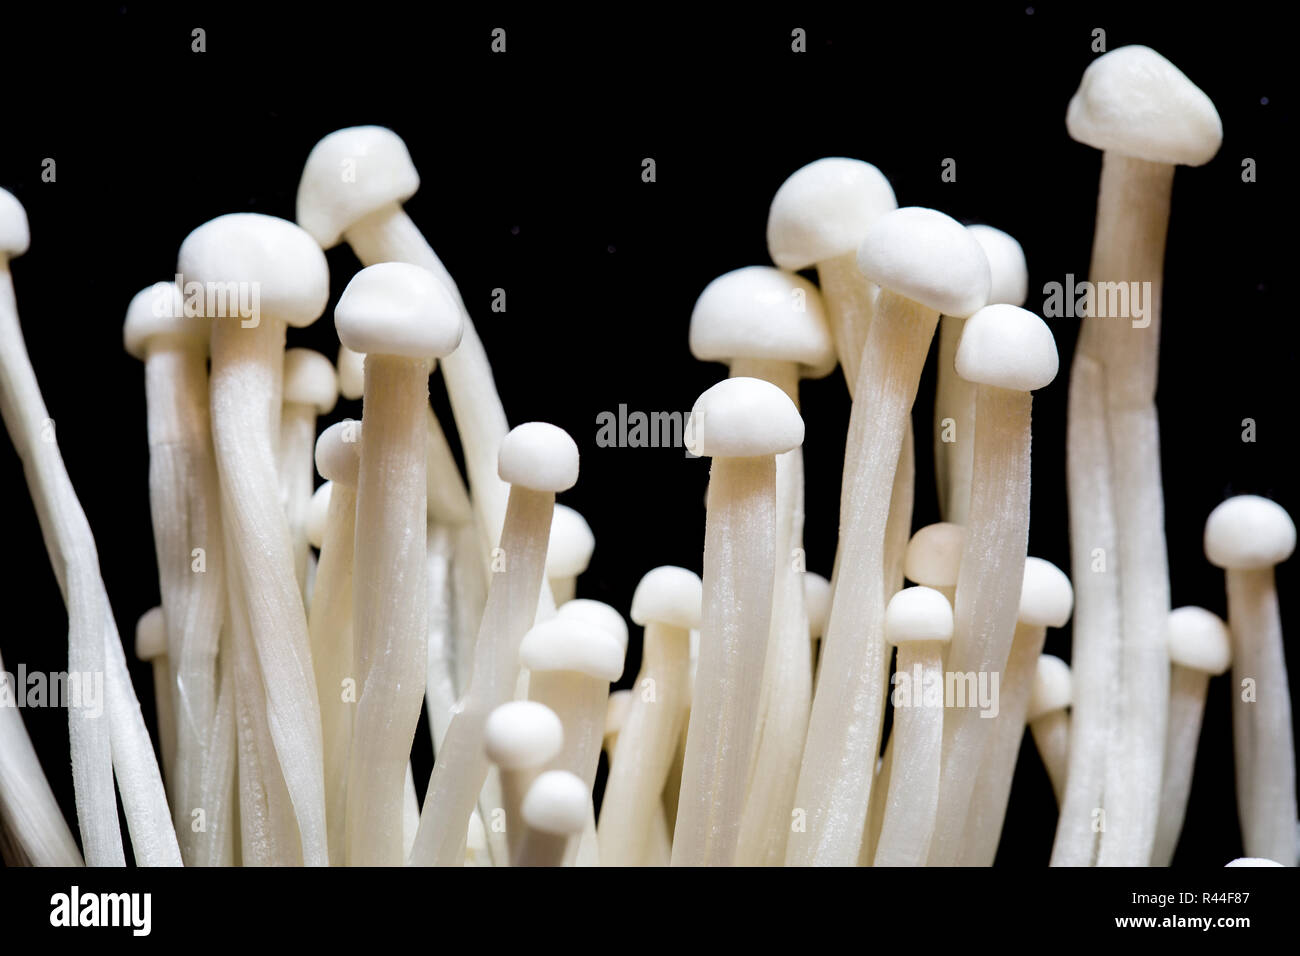 Bunch of white enoki mushrooms against black background Stock Photo